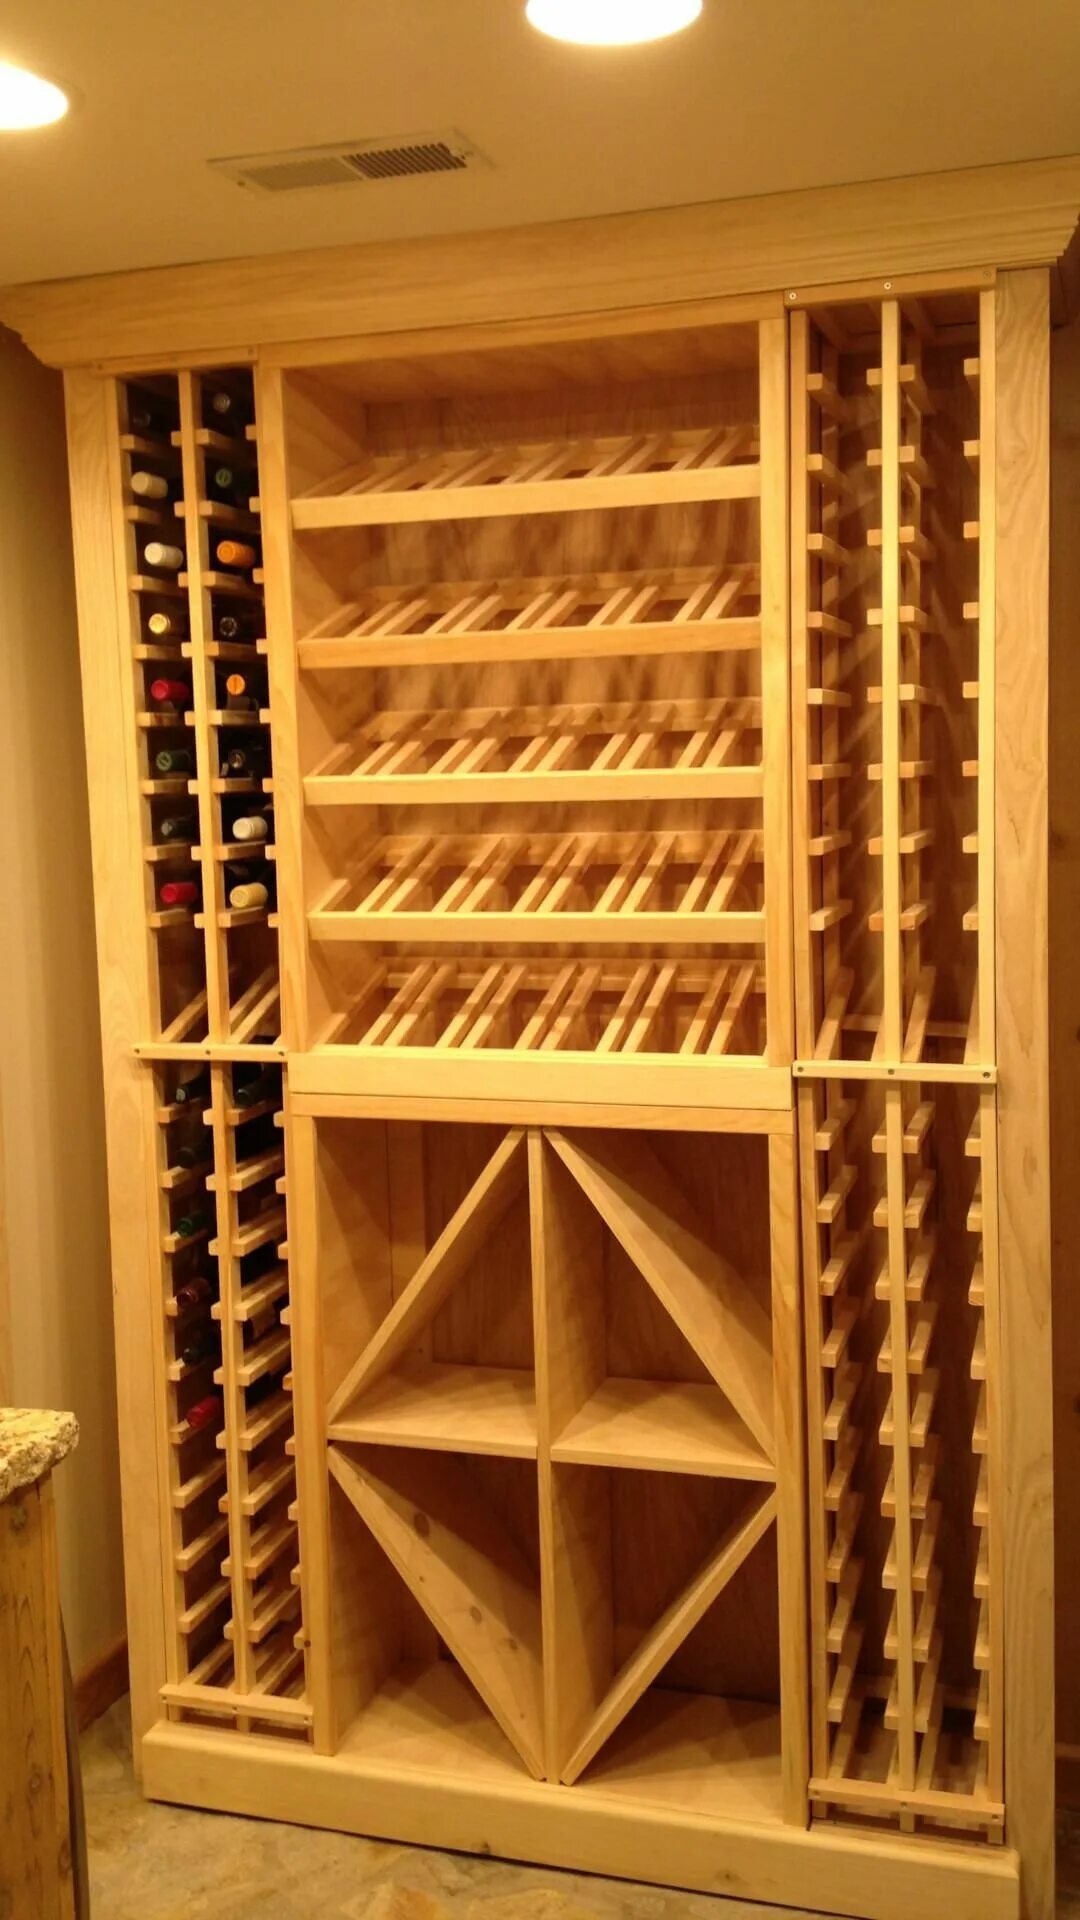 Стеллажи для погреба. Wine Storage model 430 винный шкаф. Стеллажи для винного погреба. Винные стеллажи в подвале. Стеллаж для вина в погреб.